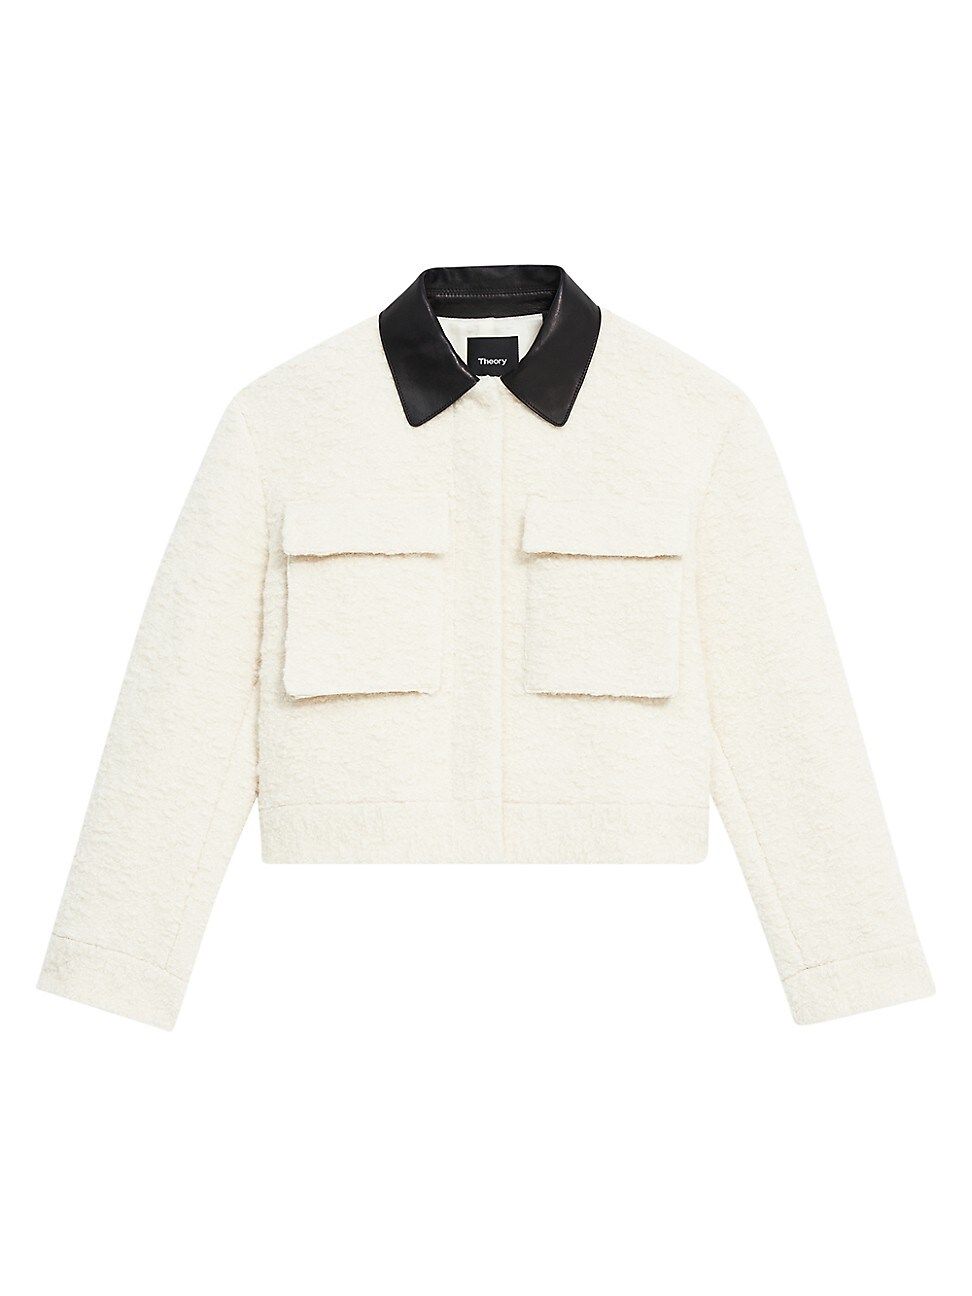 Theory Women's Utility Cropped Jacket - Ivory - Size XS | Saks Fifth Avenue